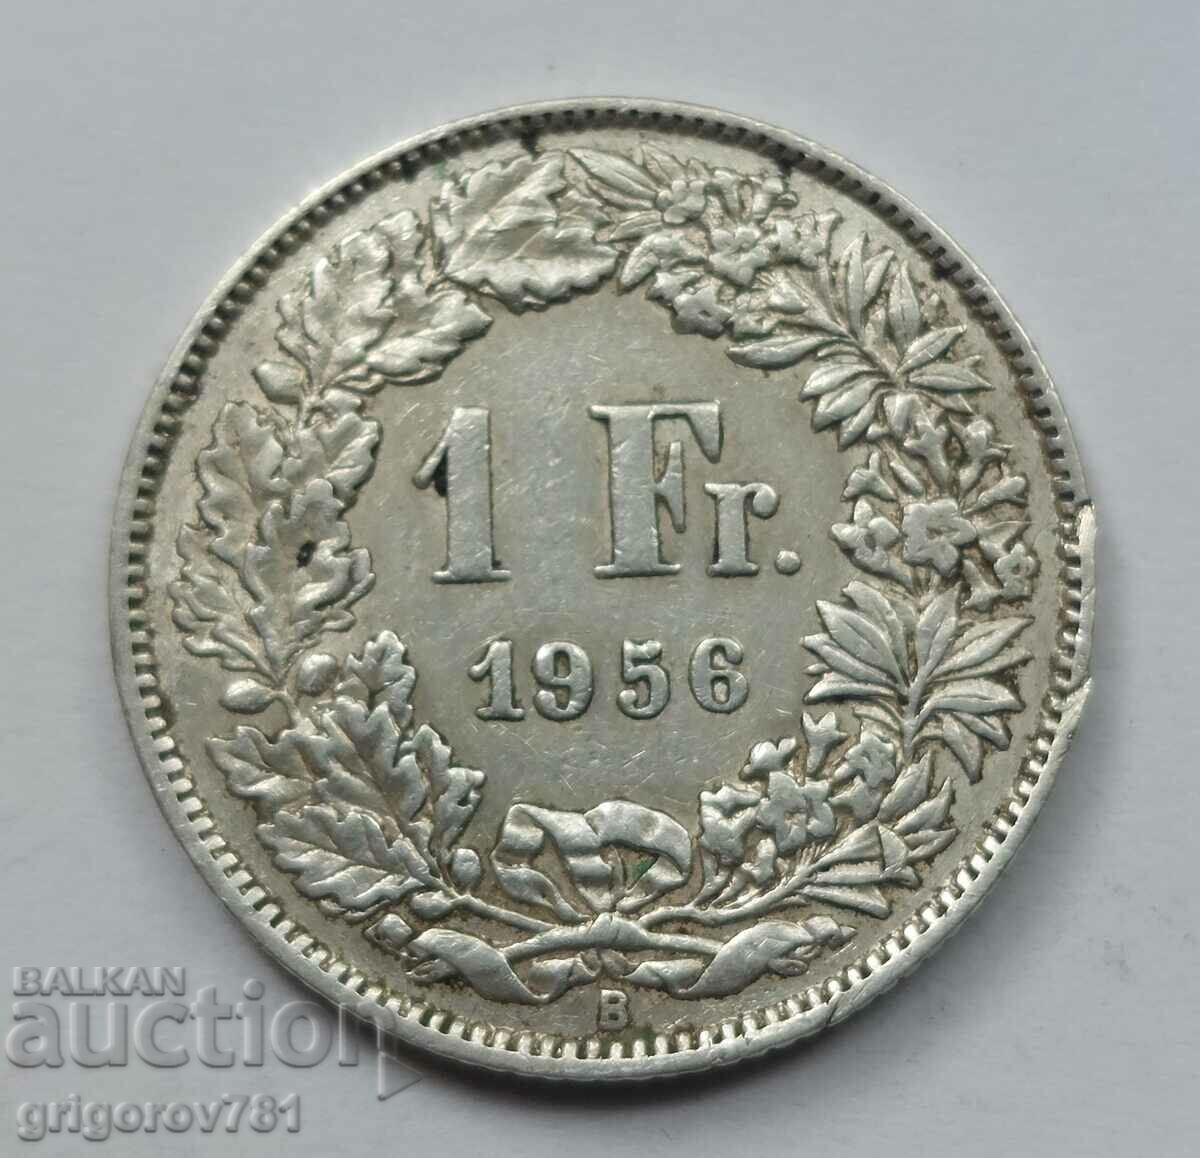 1 Franc Silver Switzerland 1956 B - Silver Coin #23